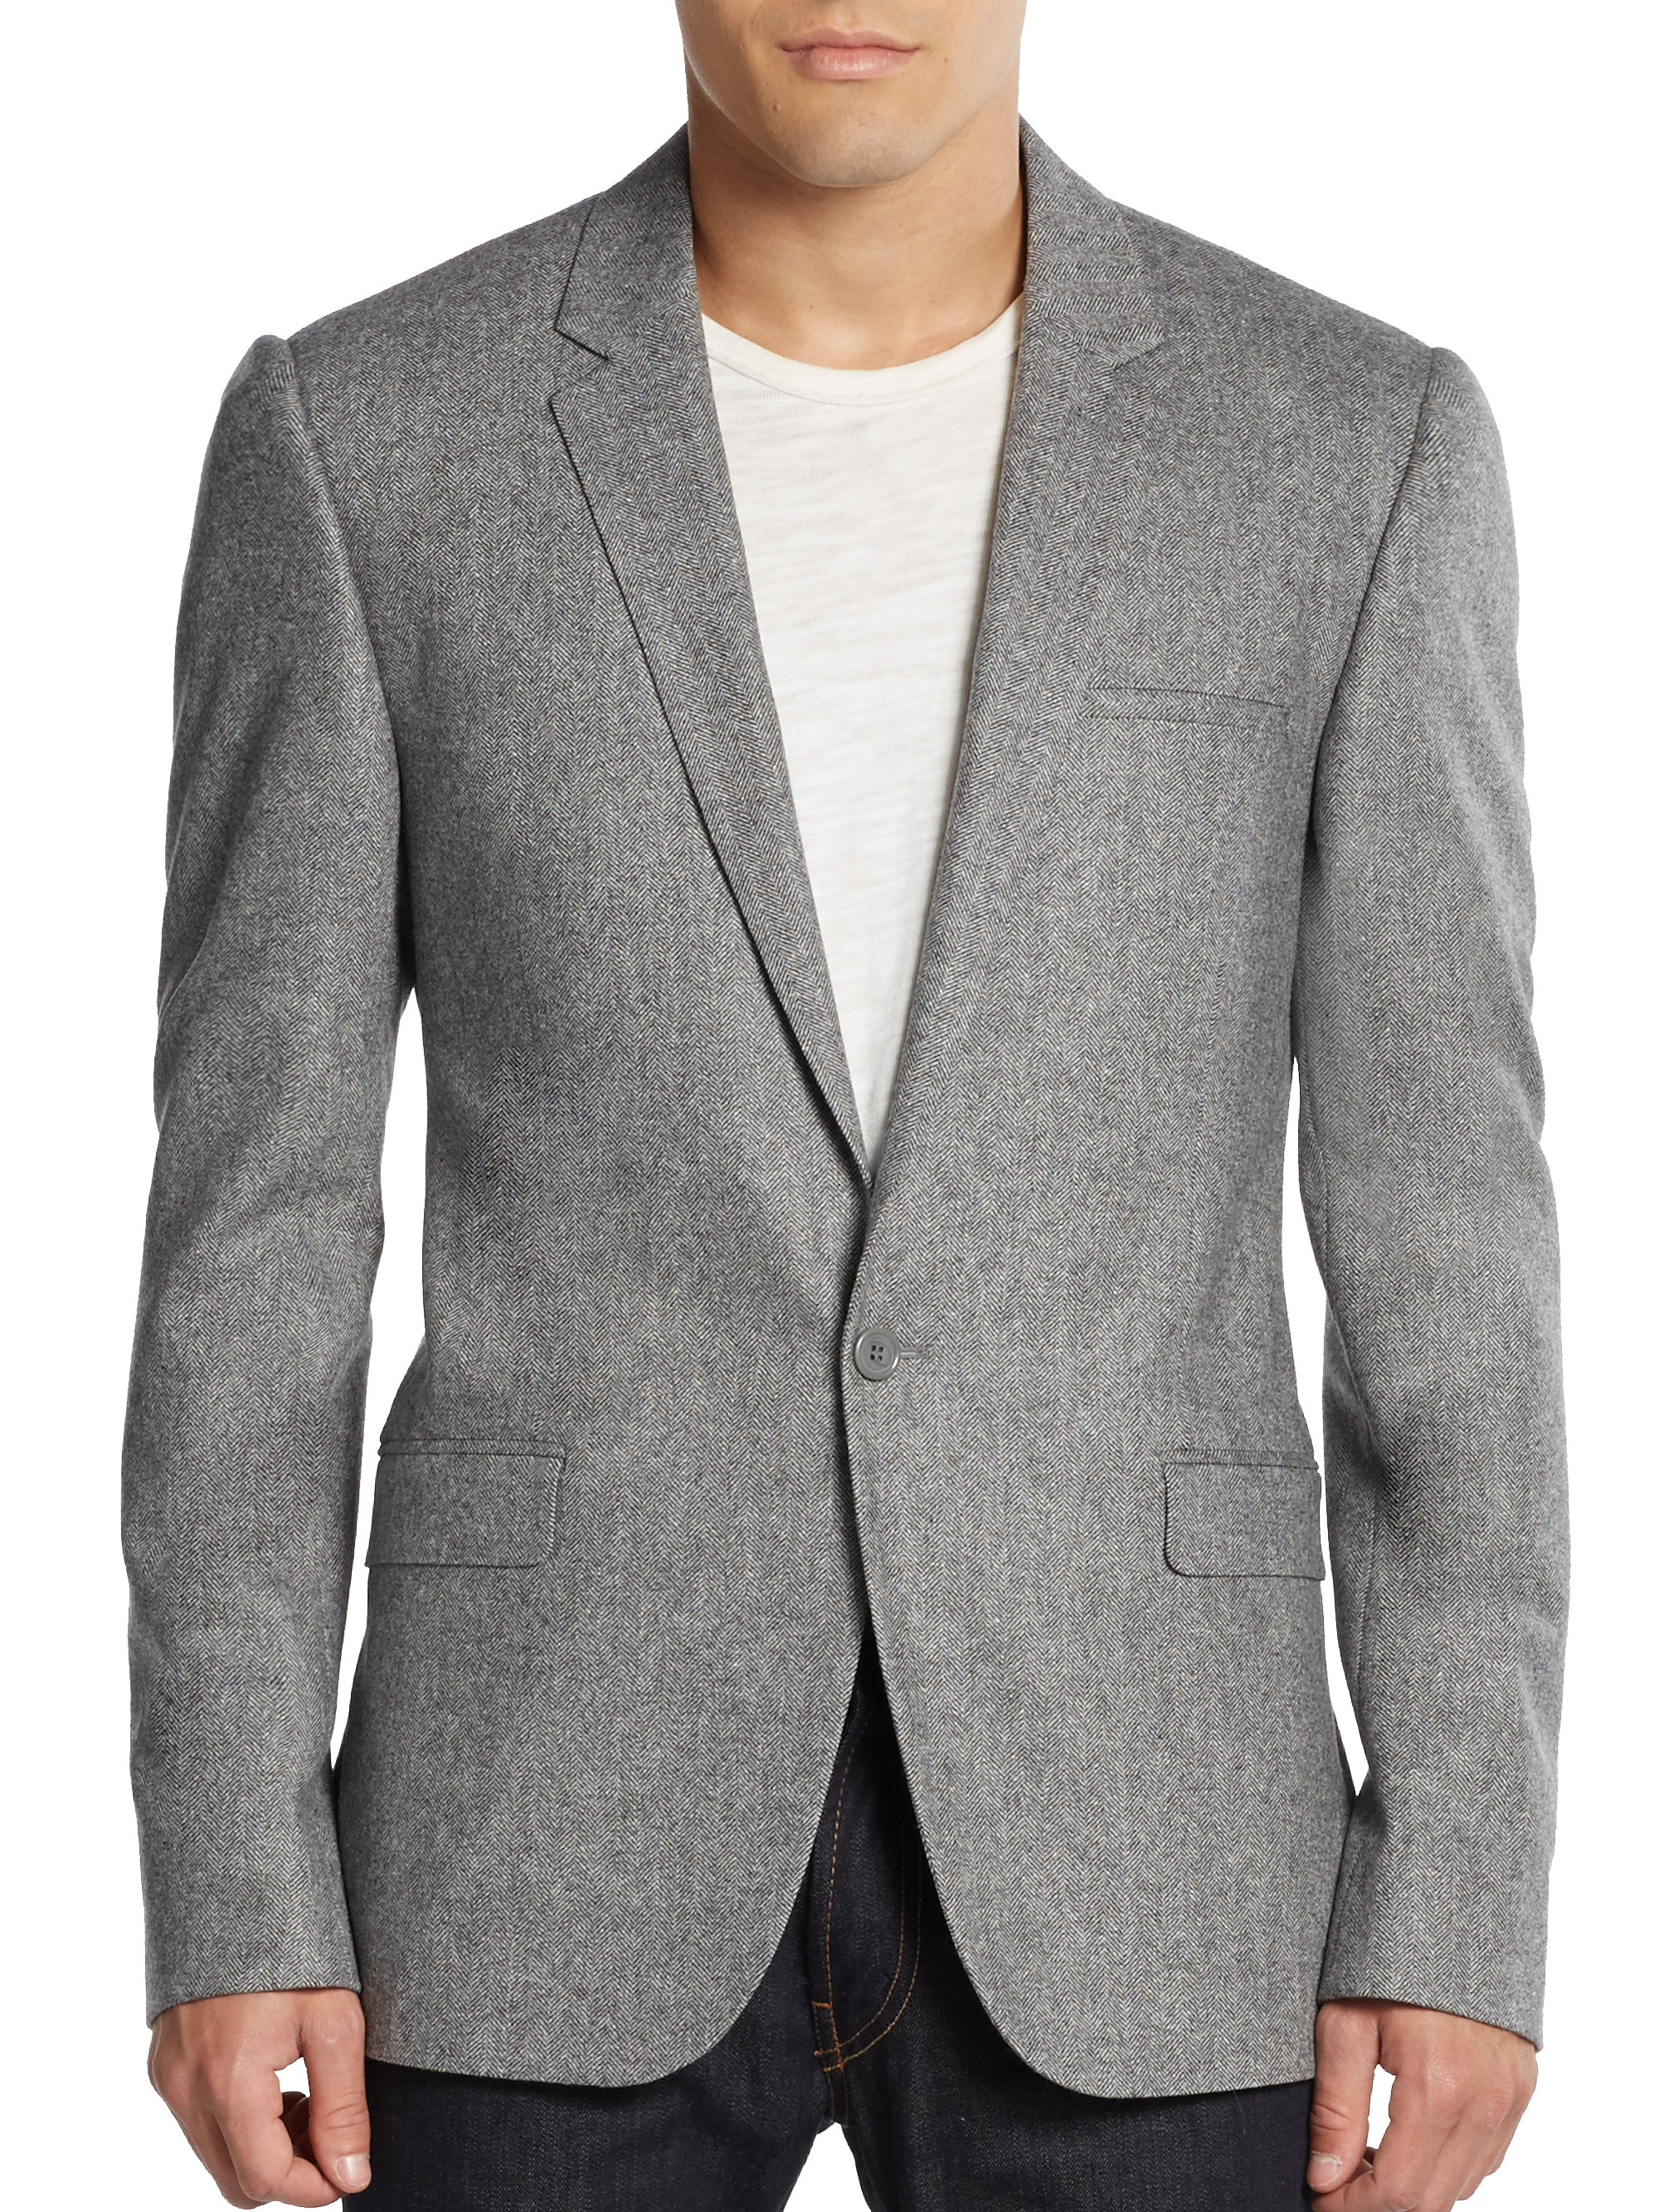 Lyst - Calvin Klein Crosby Pure Wool Herringbone Blazer in Gray for Men